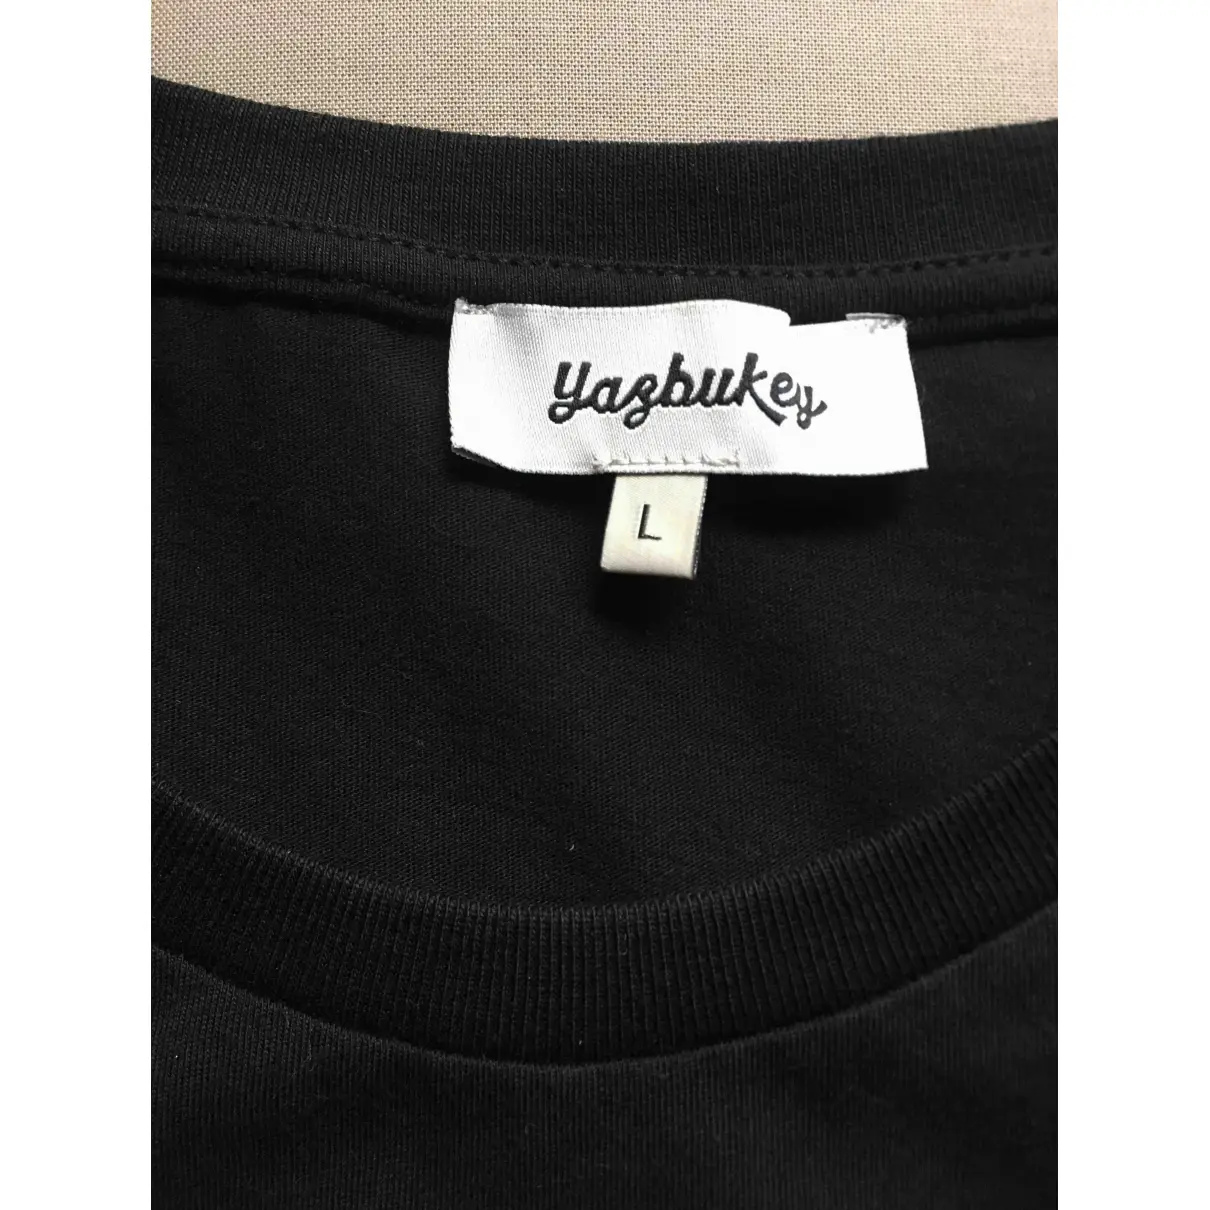 Buy Yazbukey Black Cotton Top online